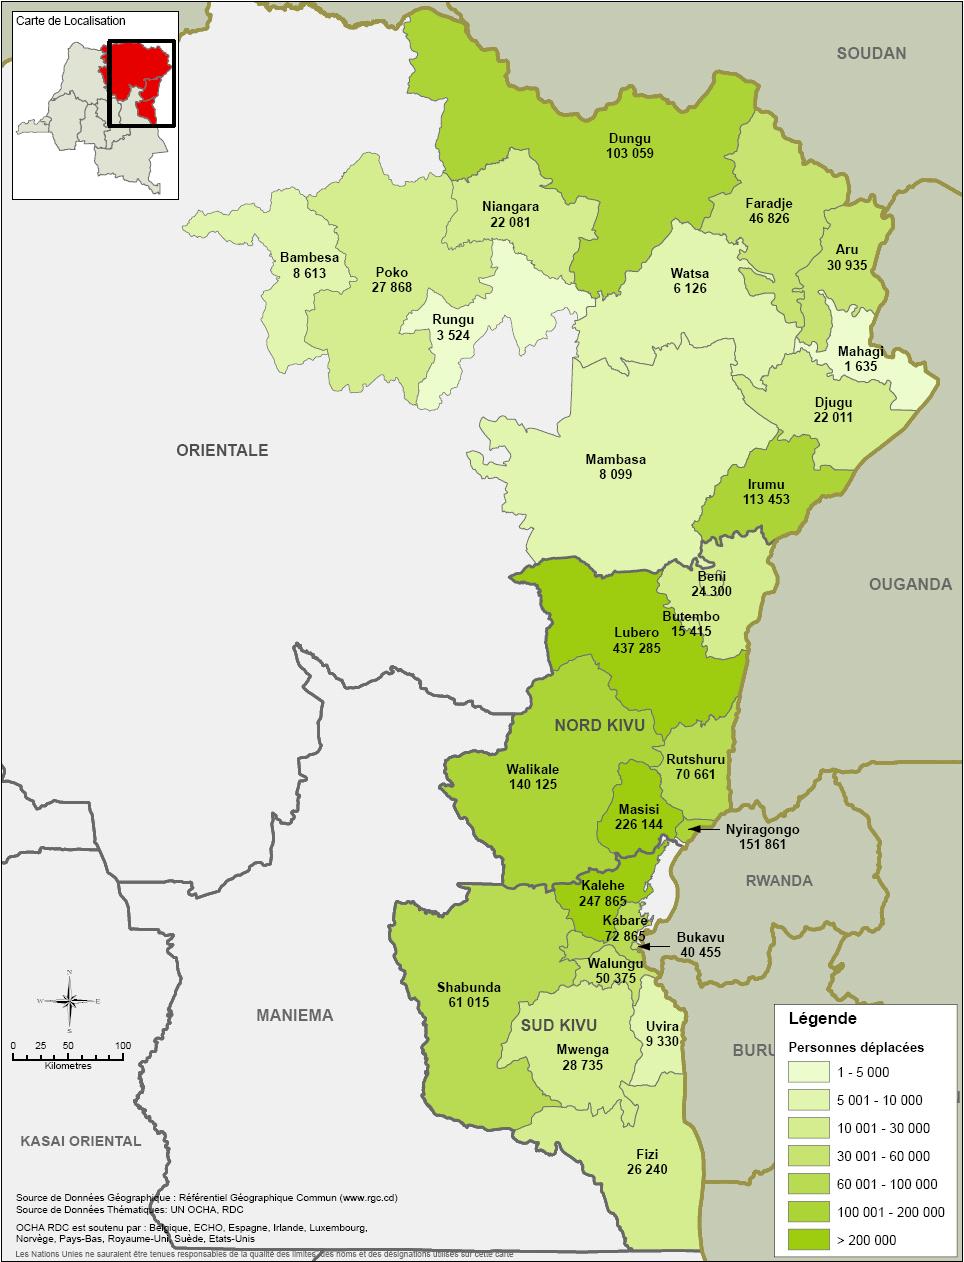 OCHA DRC POPULATION MOVEMENTS IN